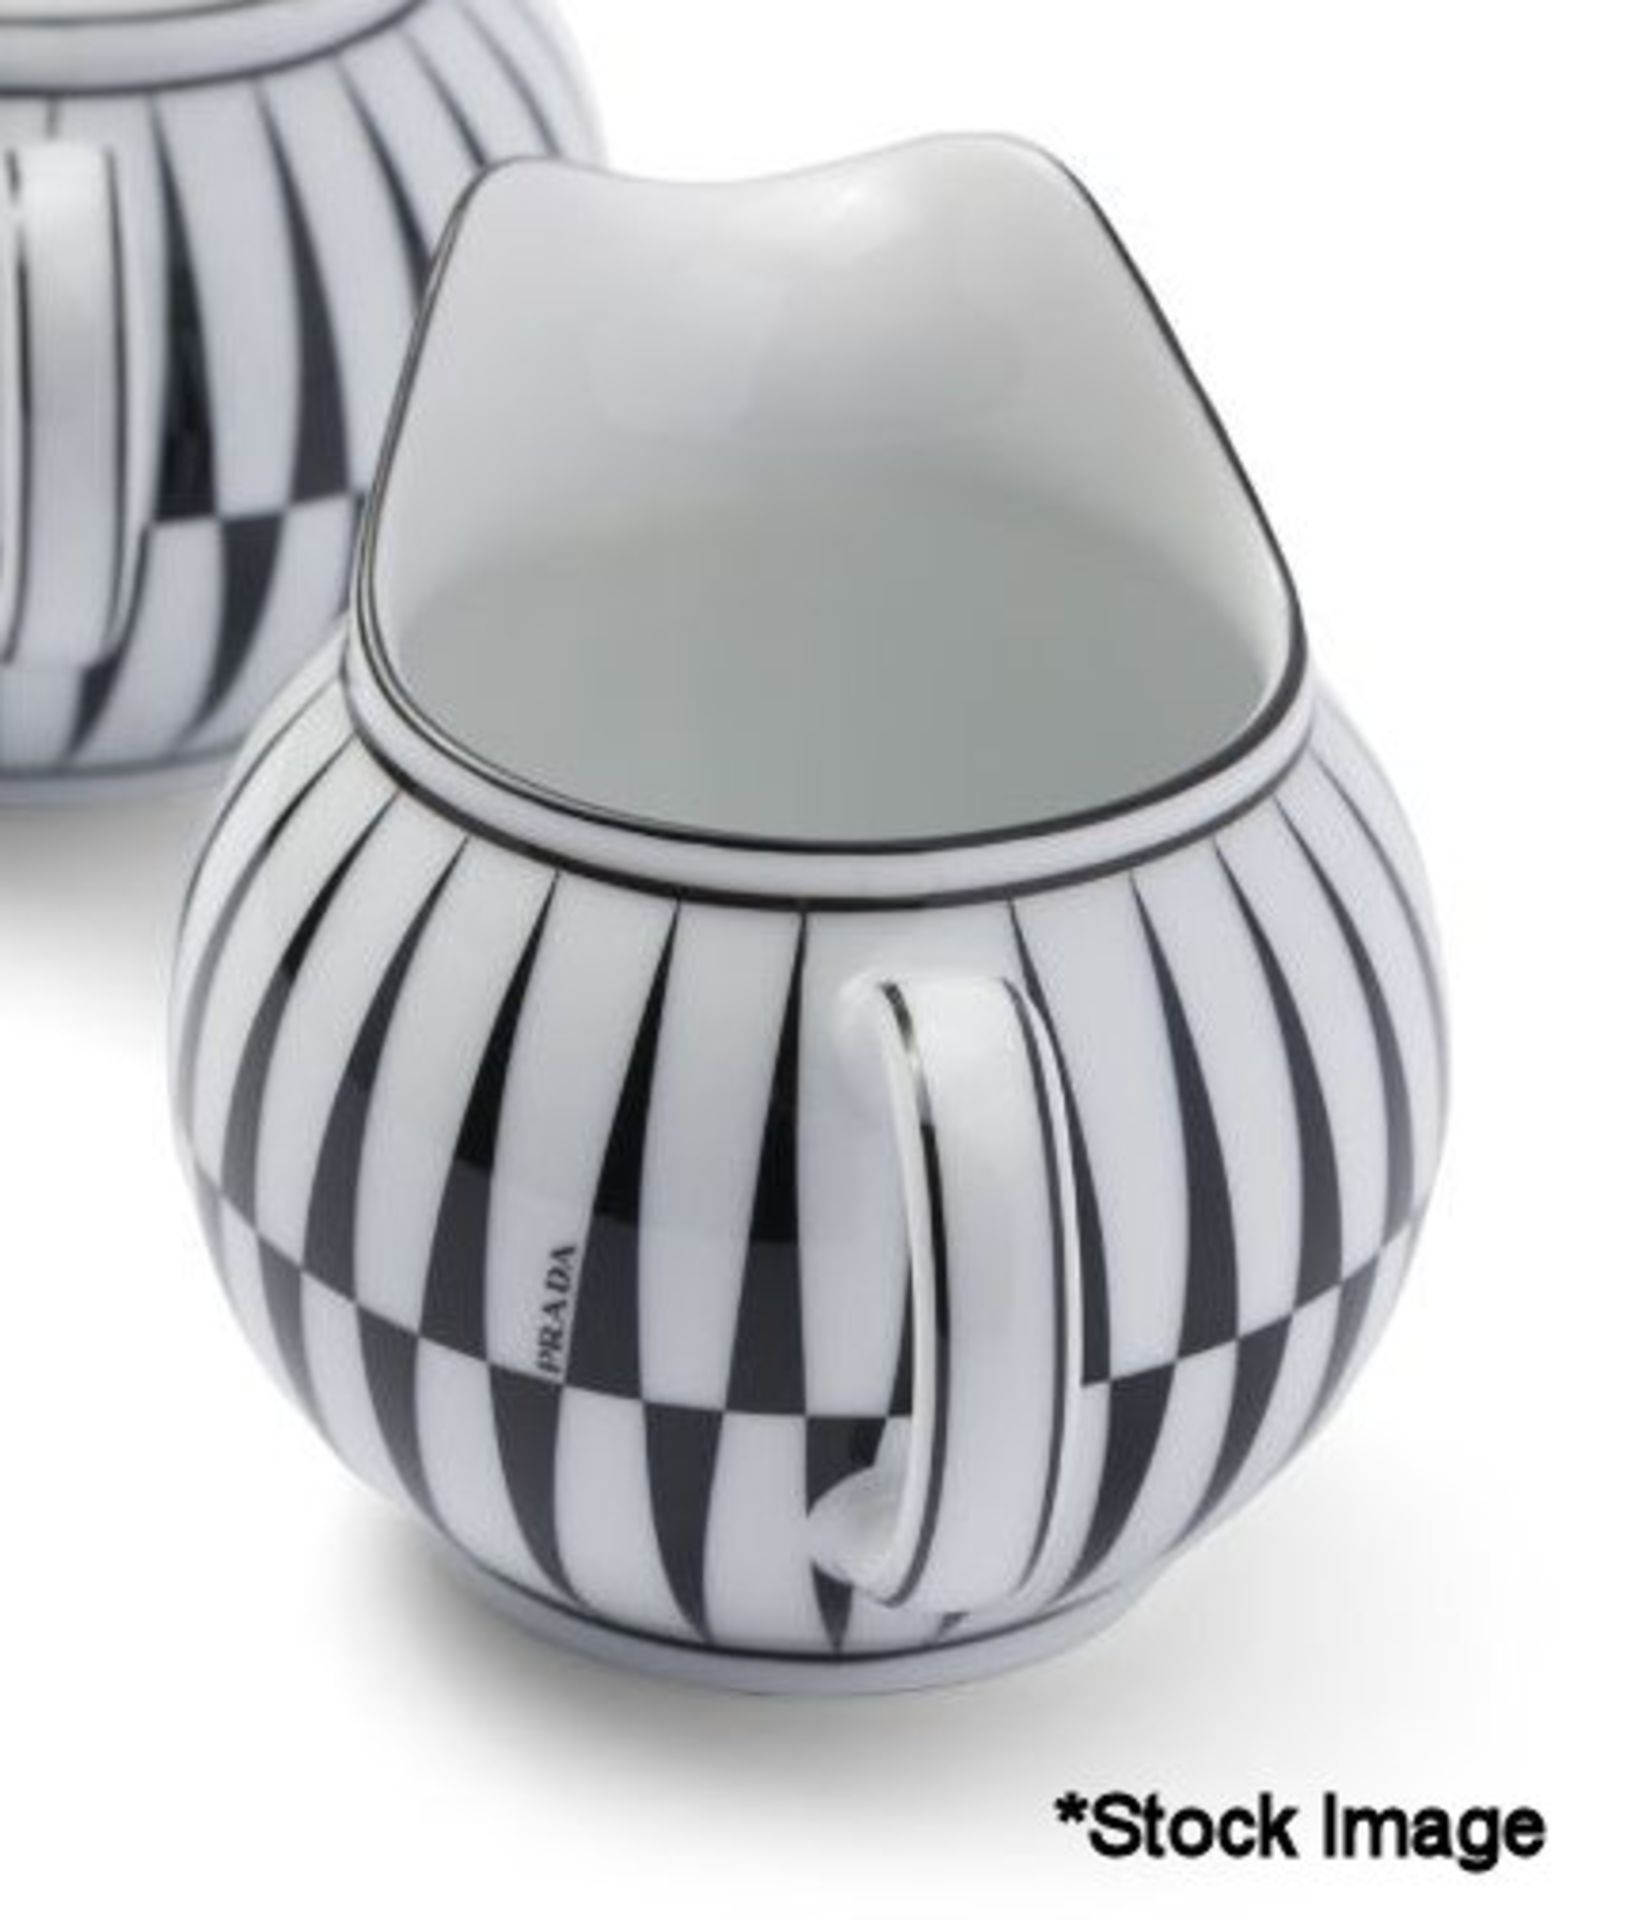 1 x PRADA Porcelain Creamer Jug In Black And White - RRP £360.00